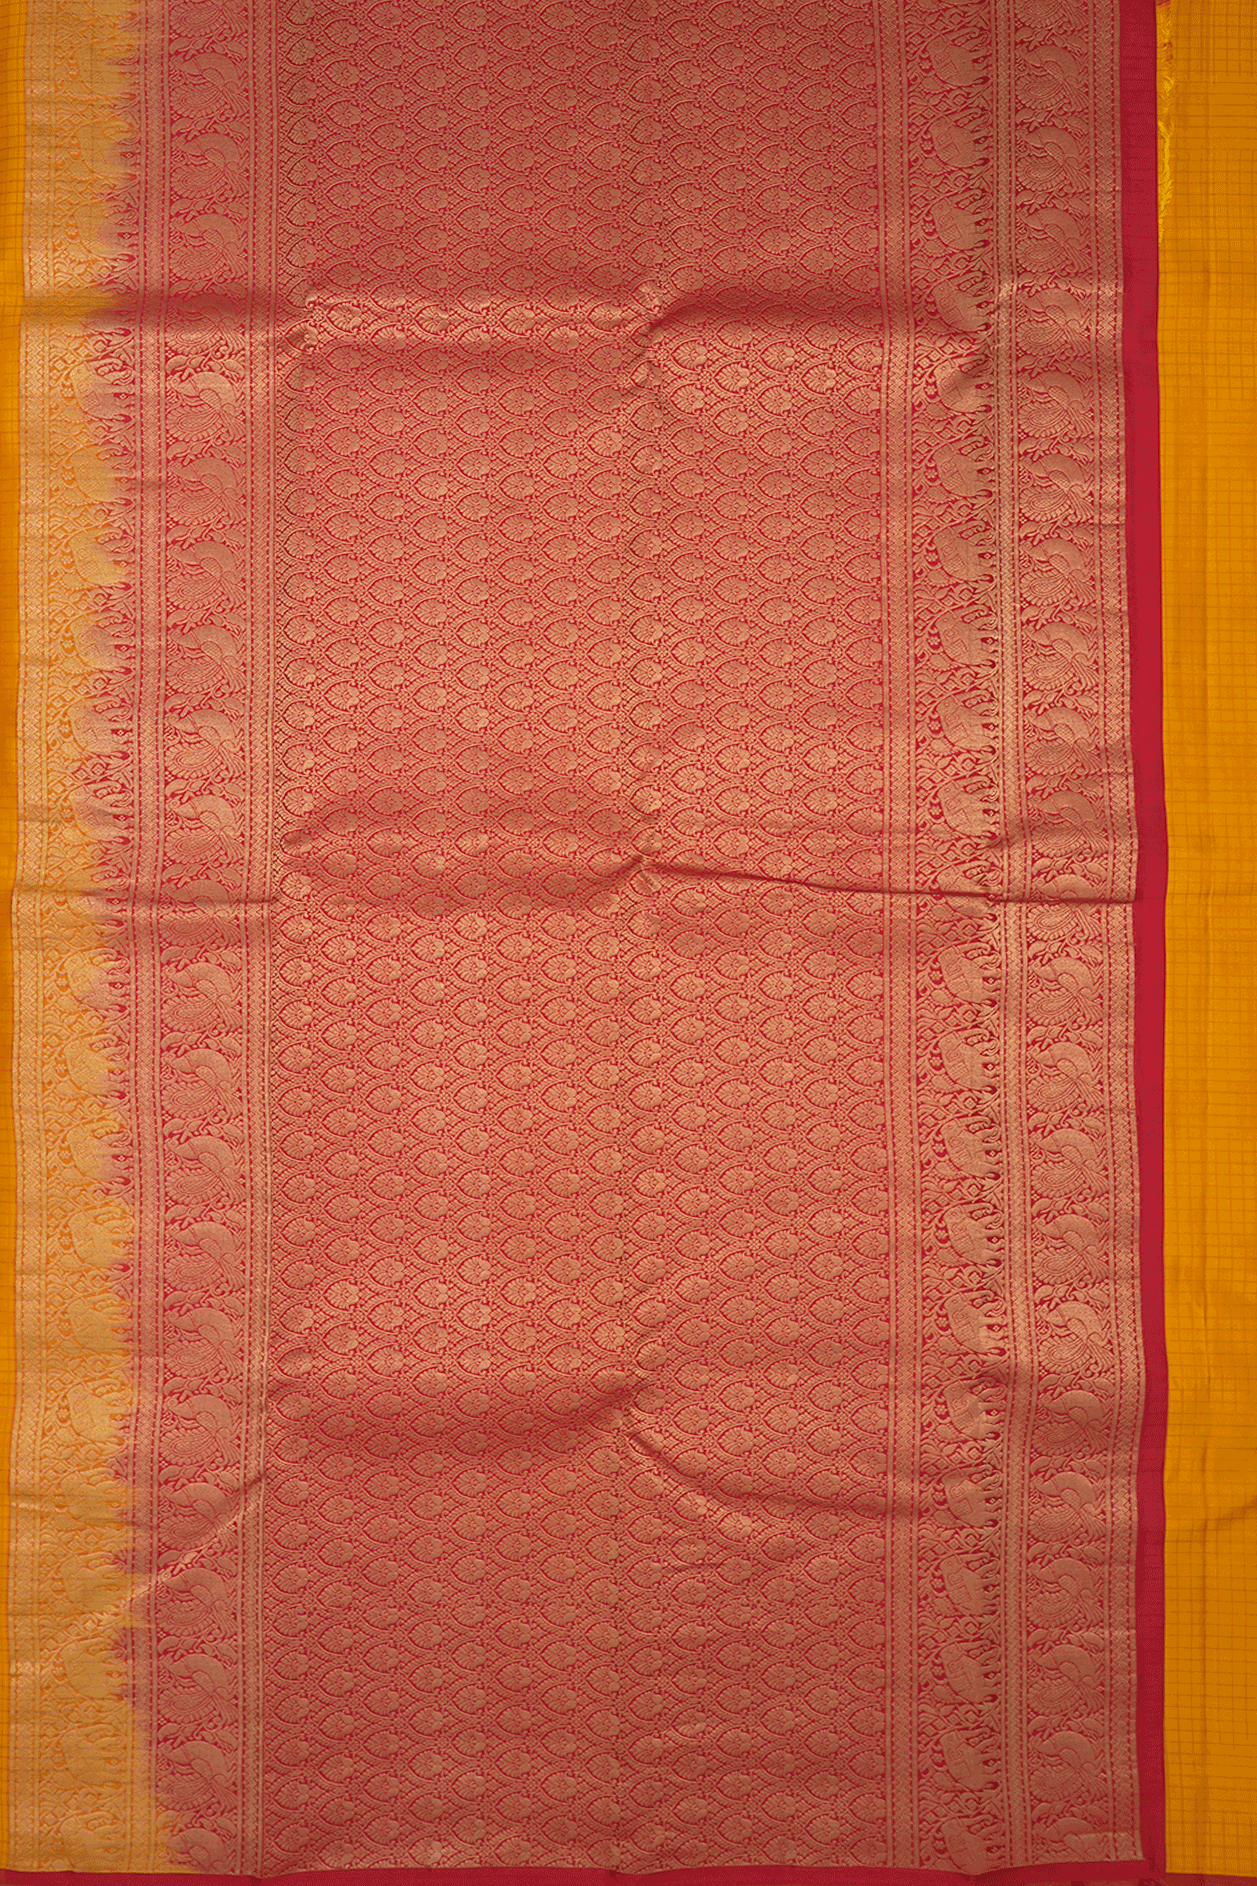 Checks With Buttas Marigold Yellow Kanchipuram Silk Saree